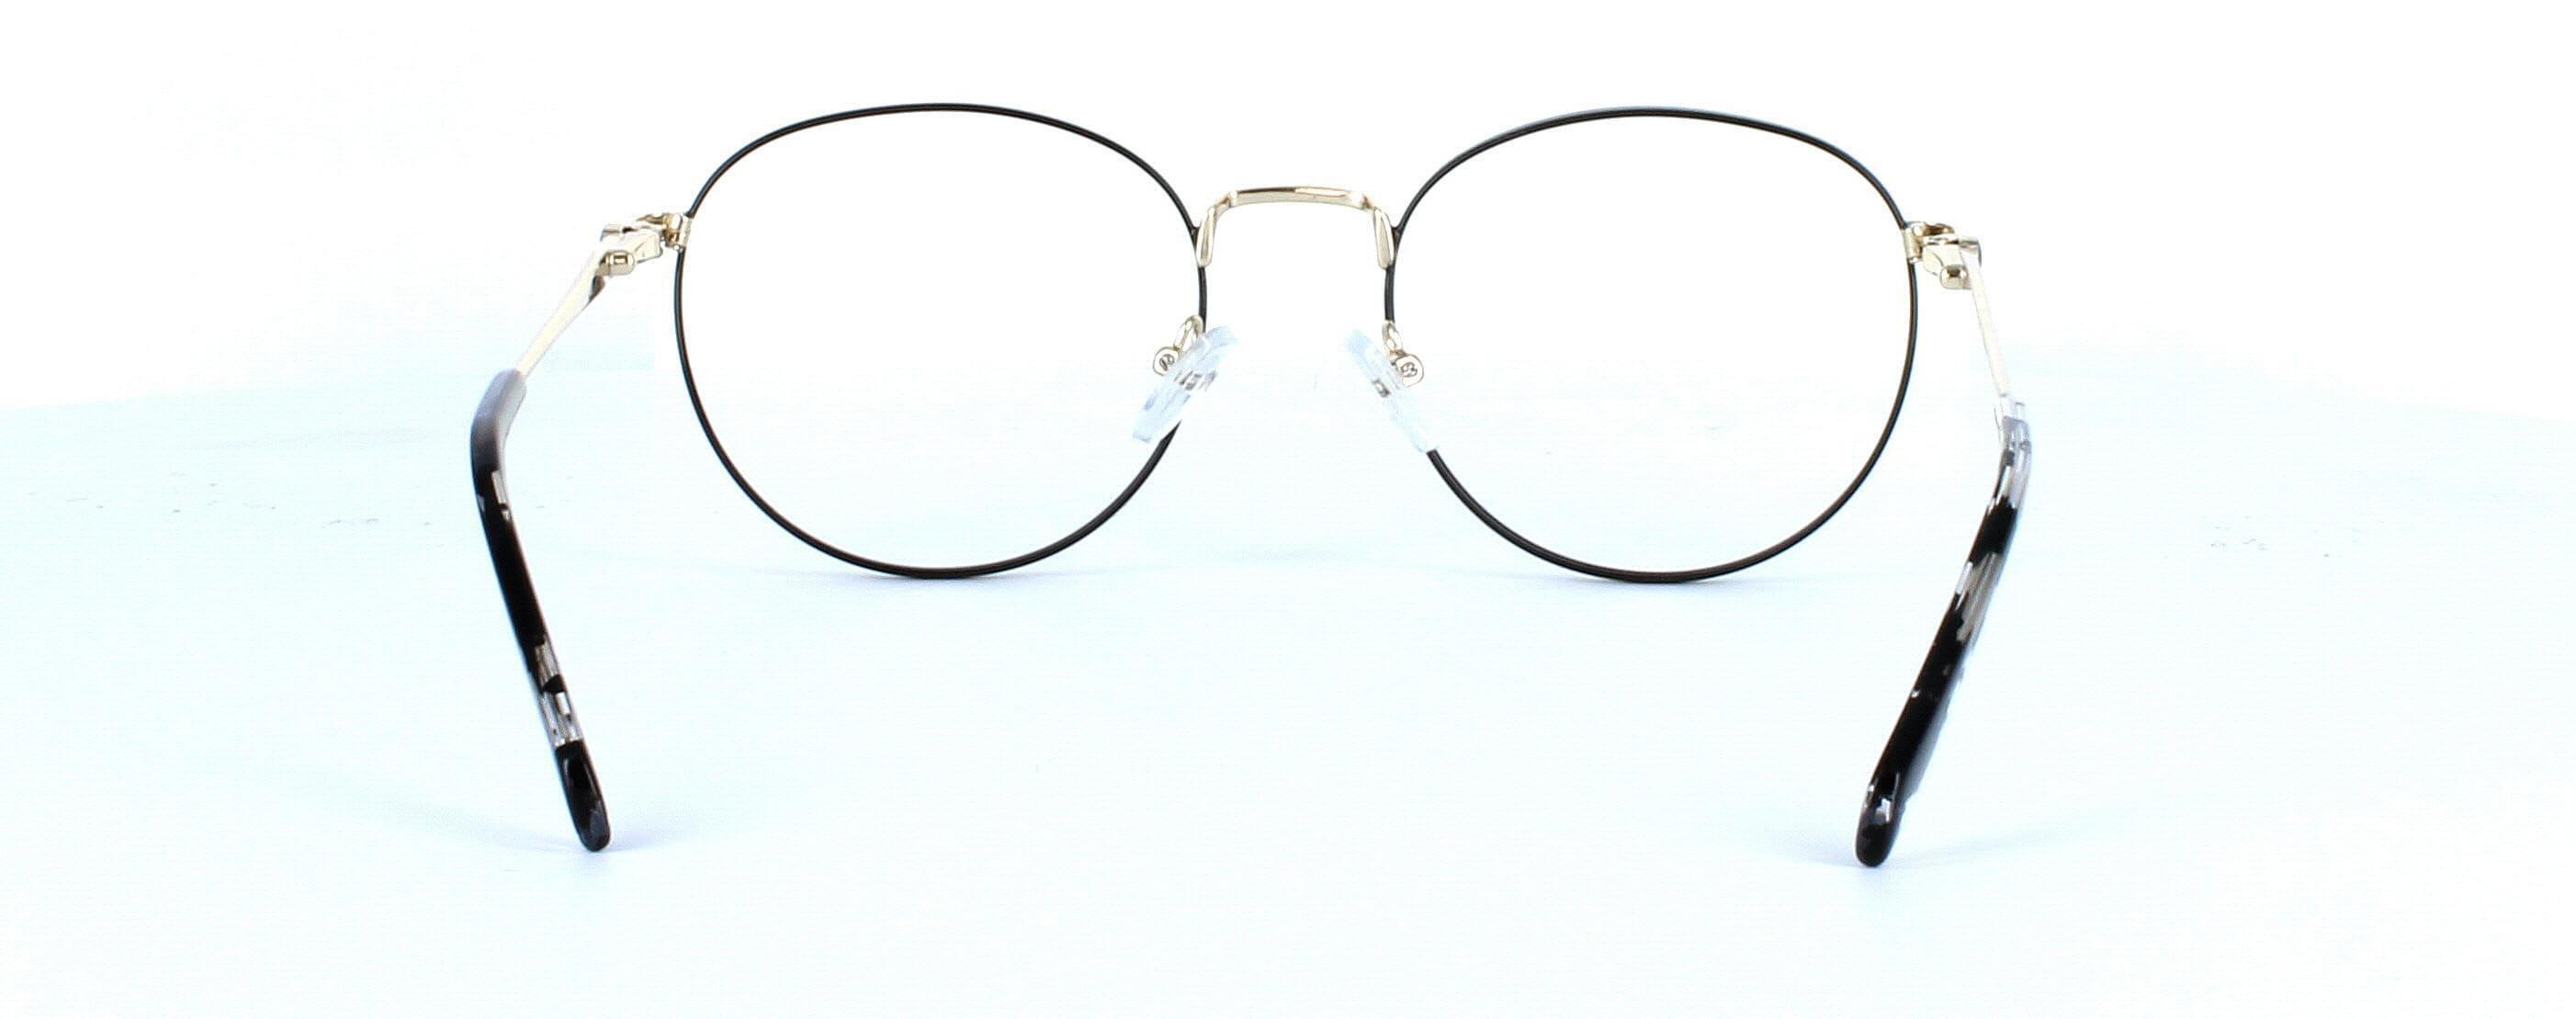 Borealis - ladies 2-tone metal glasses - black & gold - image 3